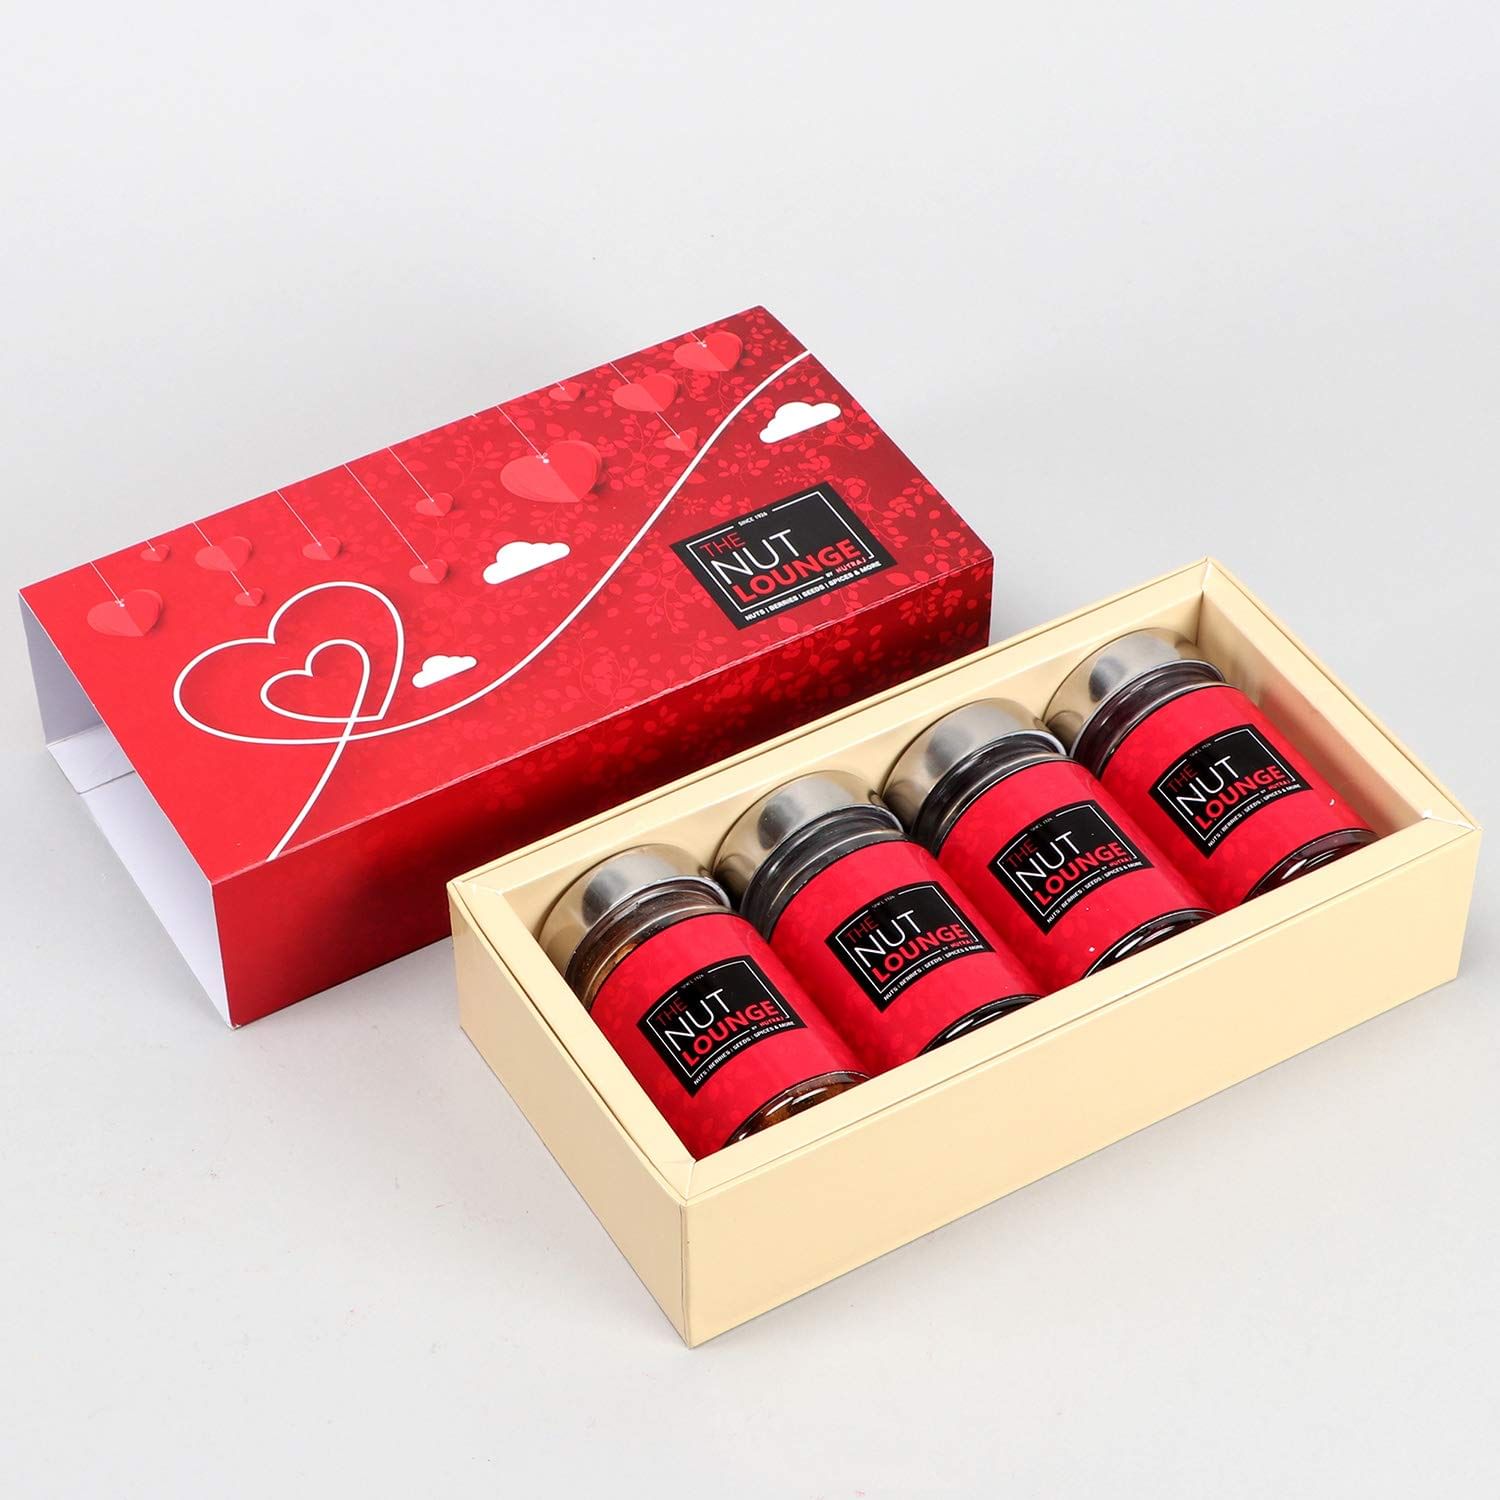 Nut Lounge Chocolate Gift Box 400g (Hazelnut Chocolate, Almond Kulfi, Sliced Cranberry, Almond Dark Chocolate 100g Each)